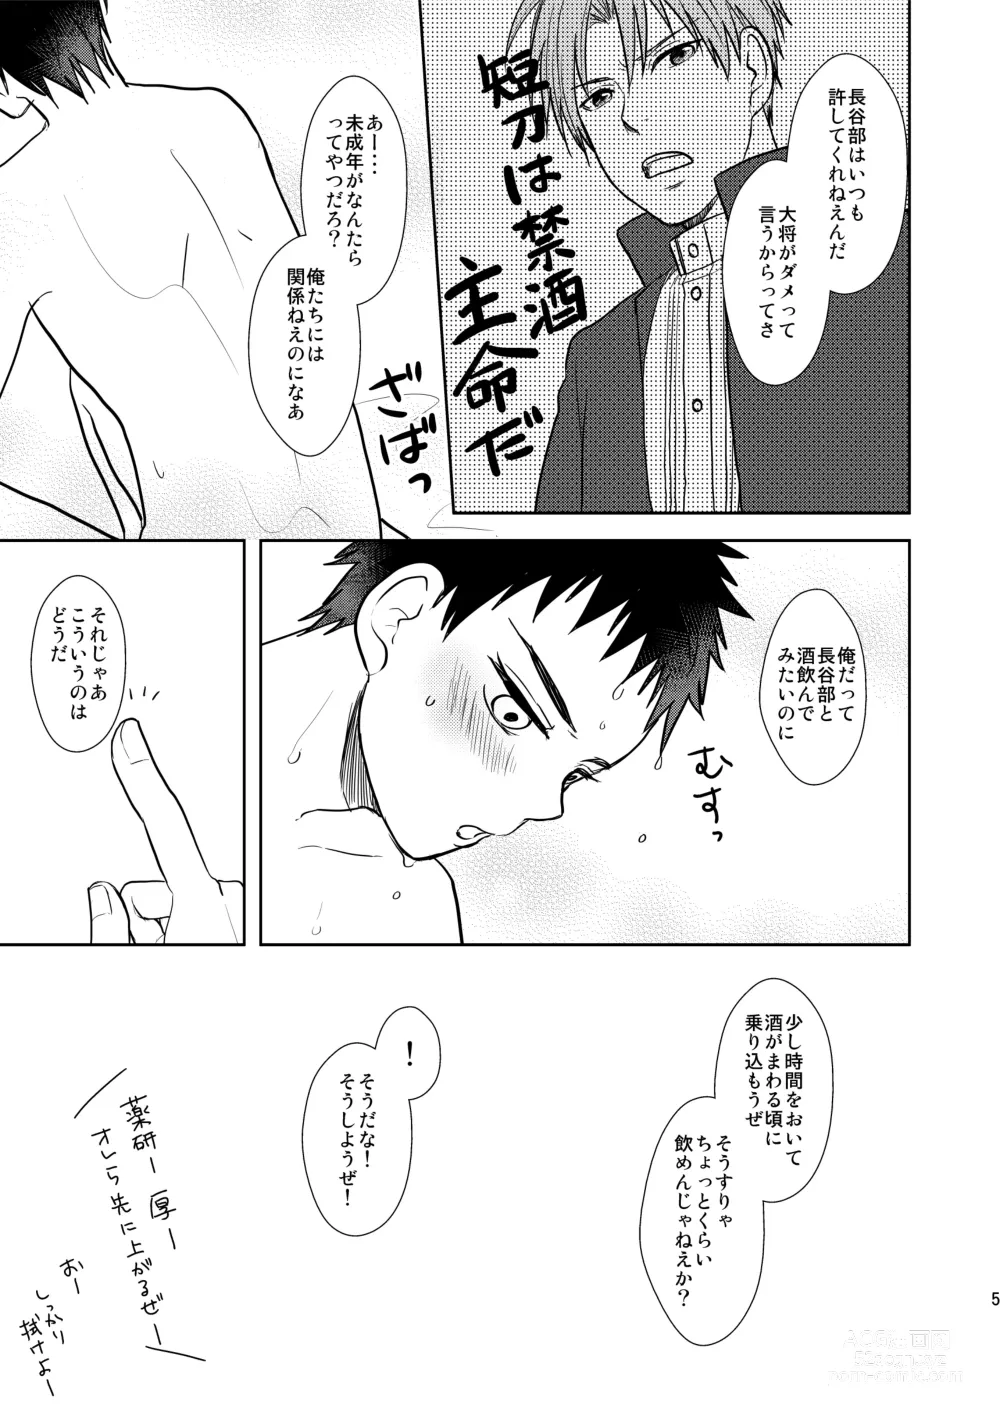 Page 4 of doujinshi Rankou Chuui